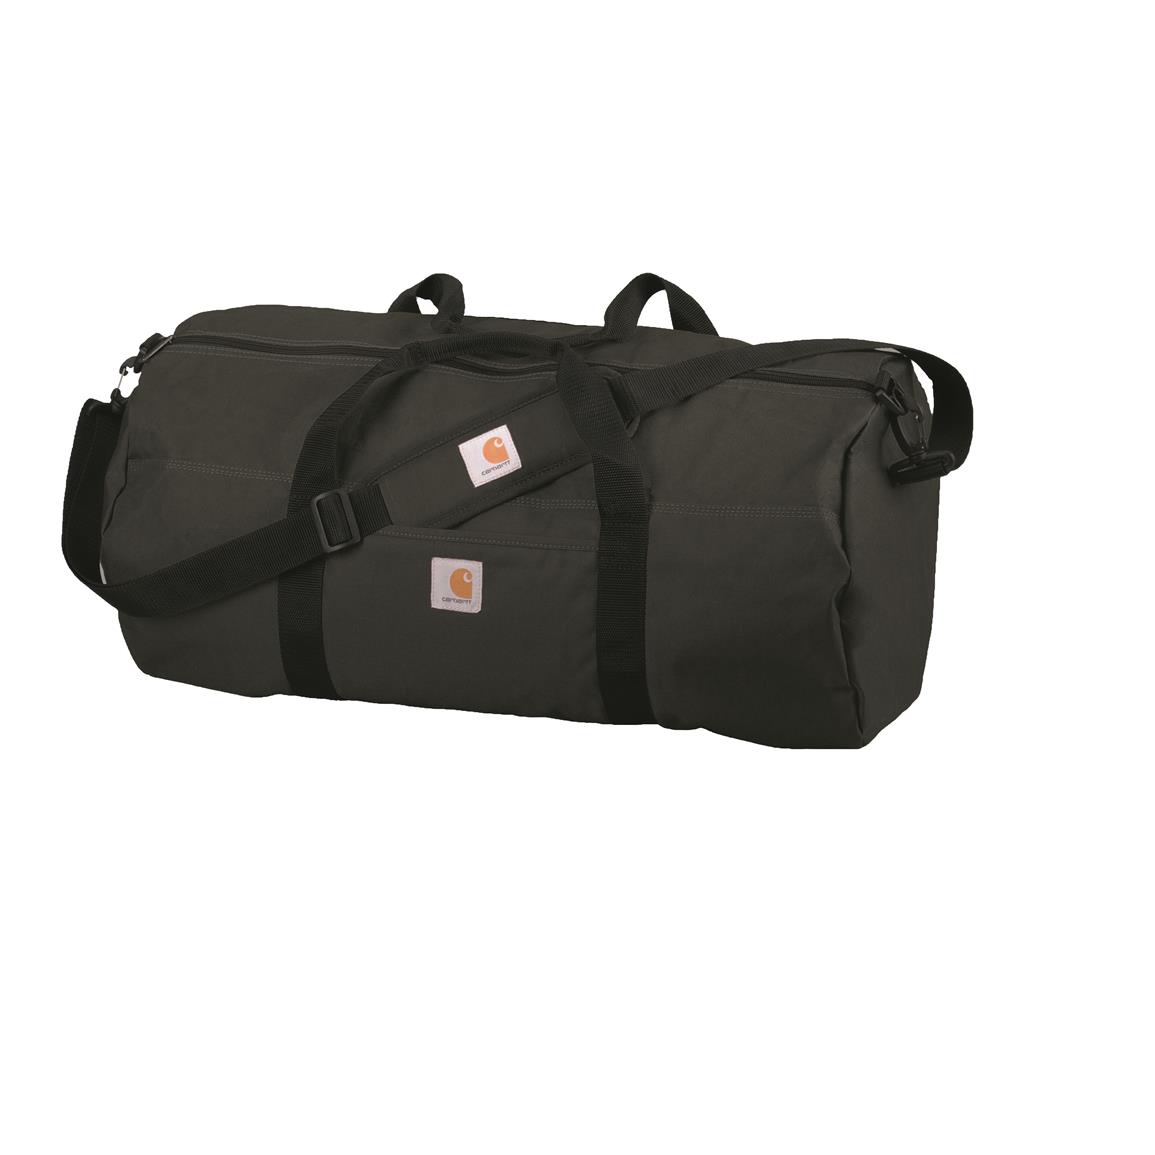 Guide Gear Dry Bag Duffel - 581924, Gear & Duffel Bags at Sportsman's Guide